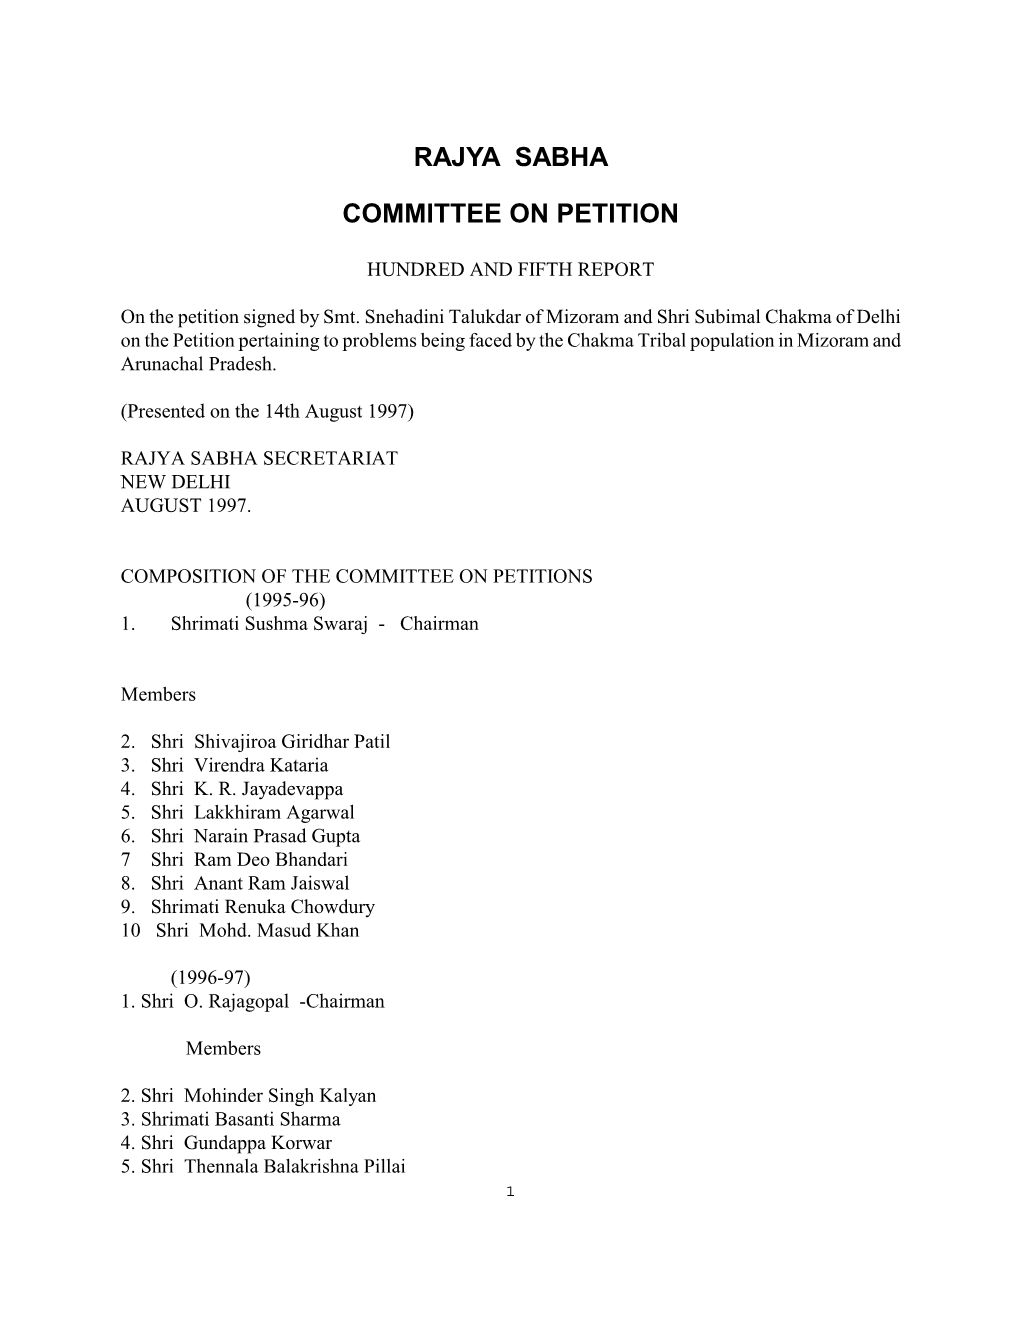 Rajya Sabha Committee on Petition